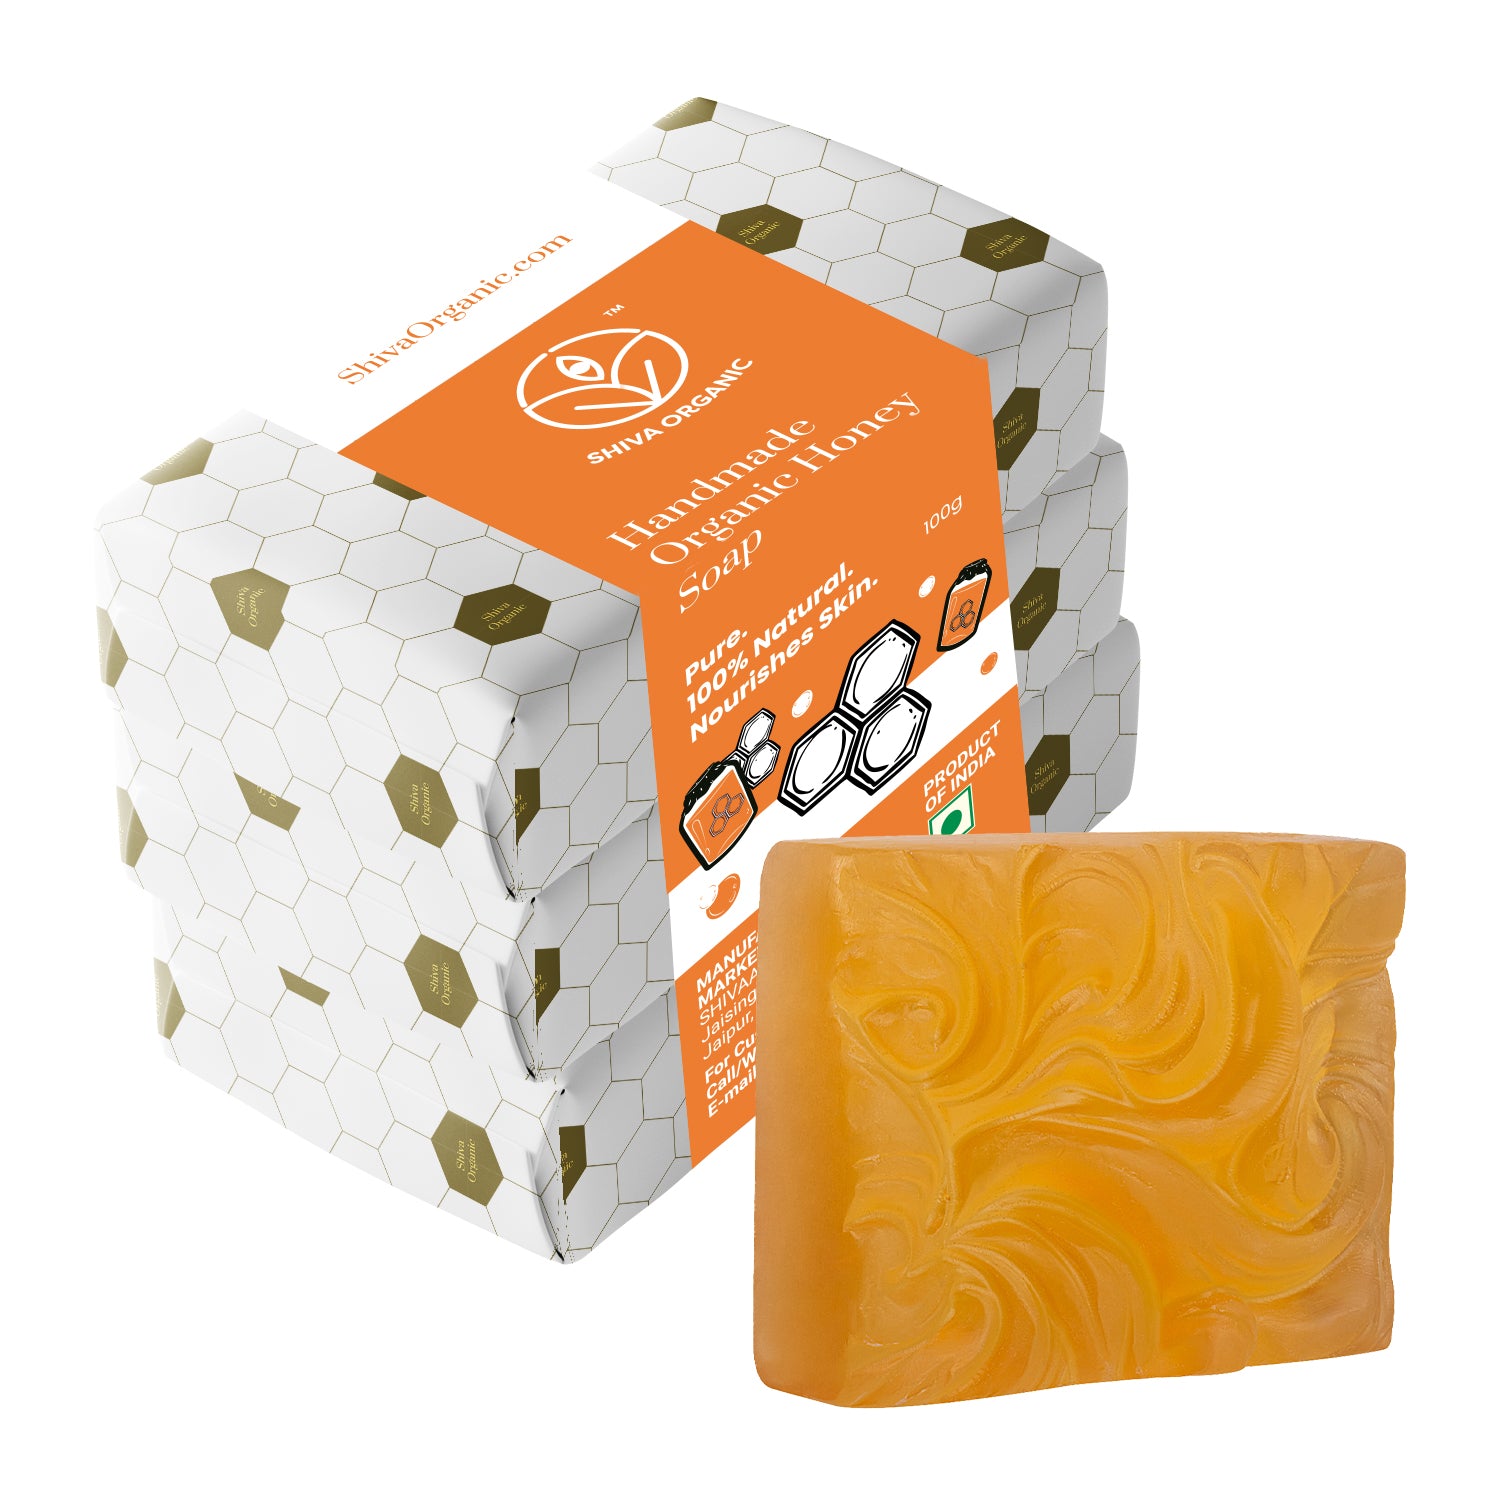 Handmade Soap | Shiva Organic | Natural Honey